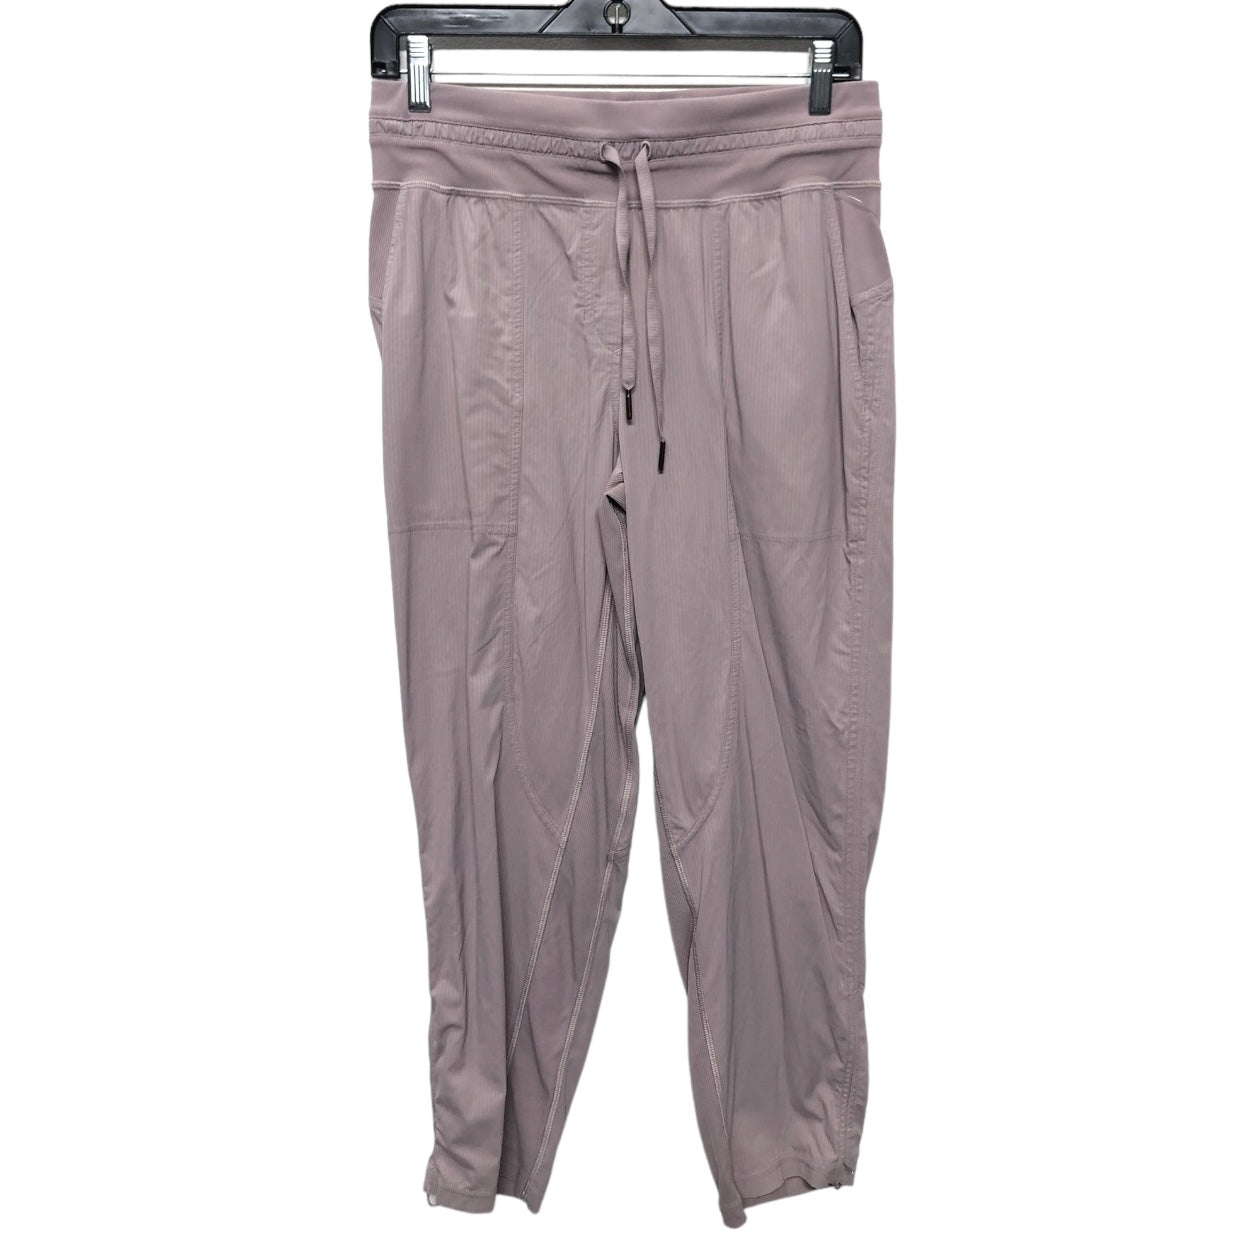 Purple Athletic Pants Lululemon, Size 6